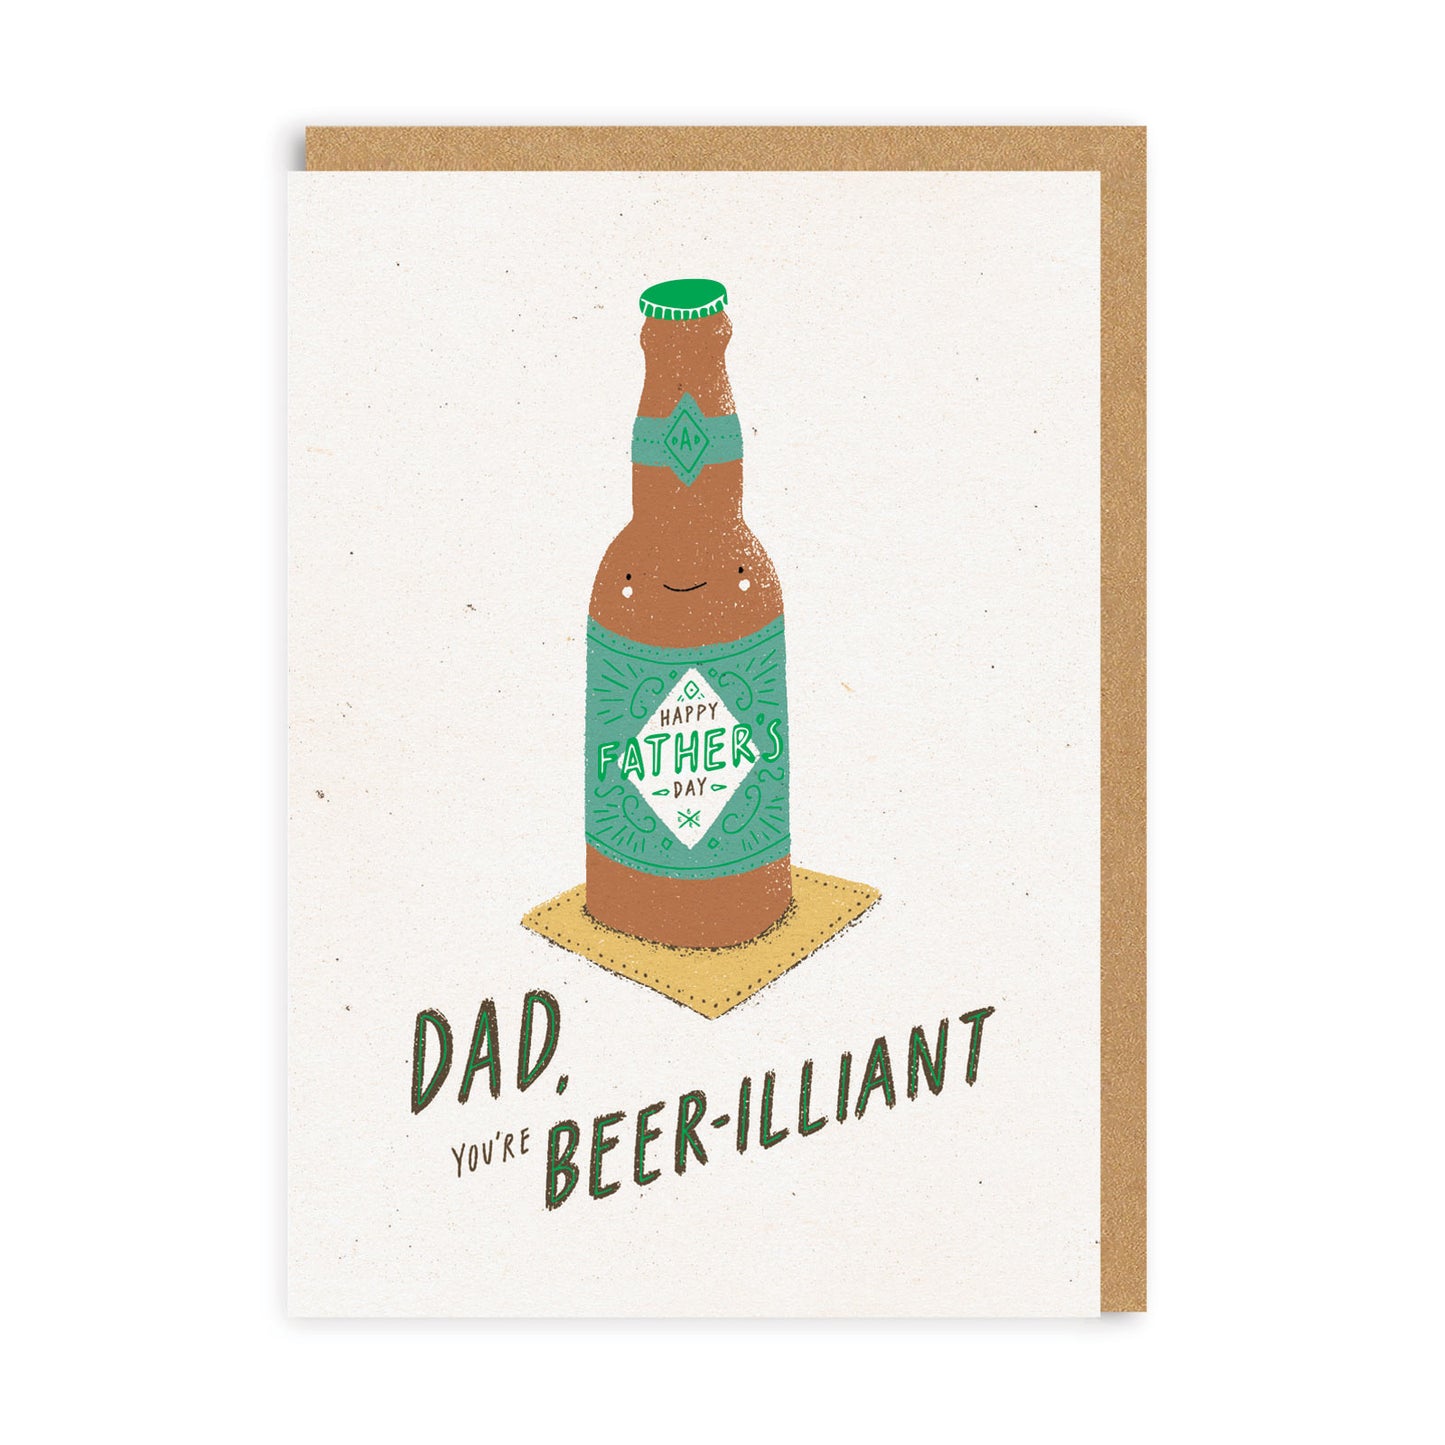 Beer-illiant Dad Greeting Card